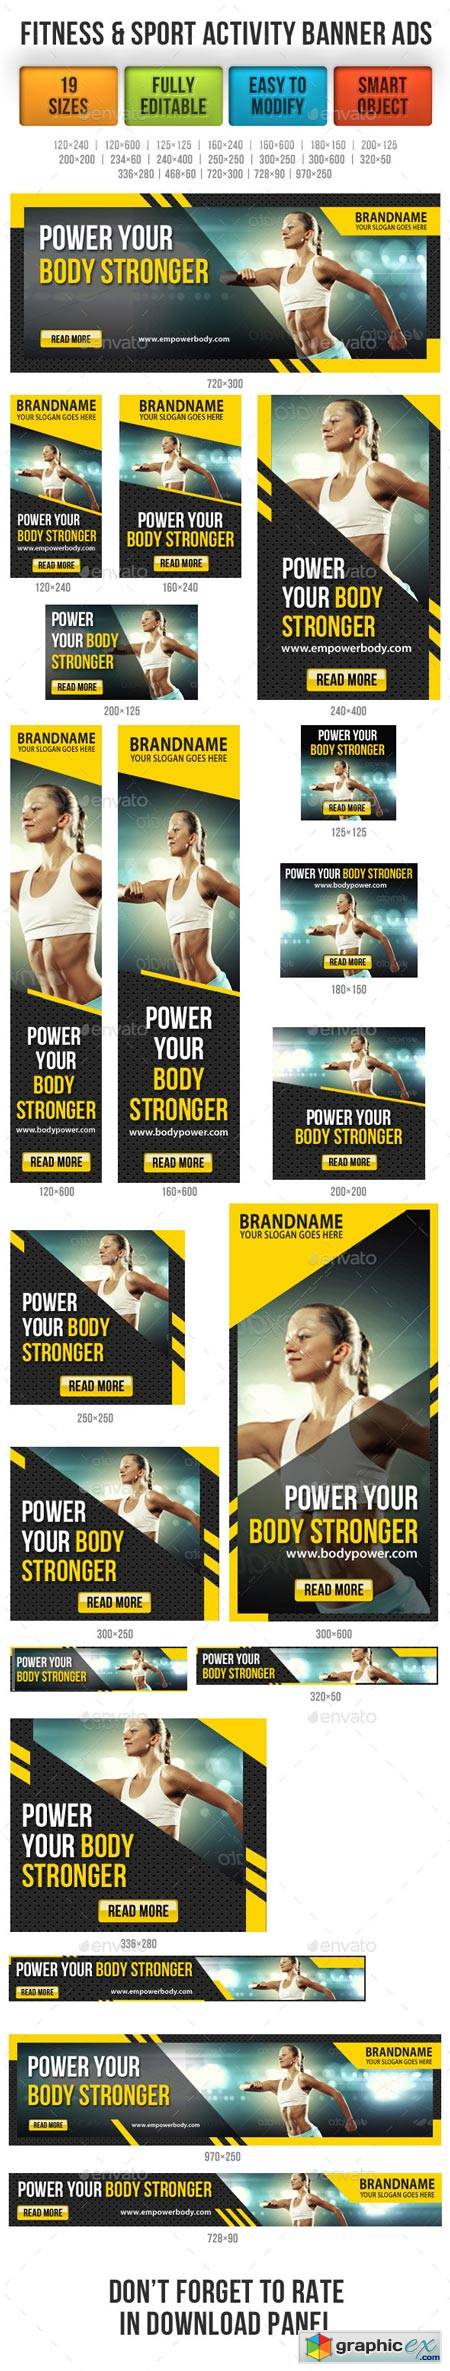 Fitness & Sport Activity Banner Ads 9120130